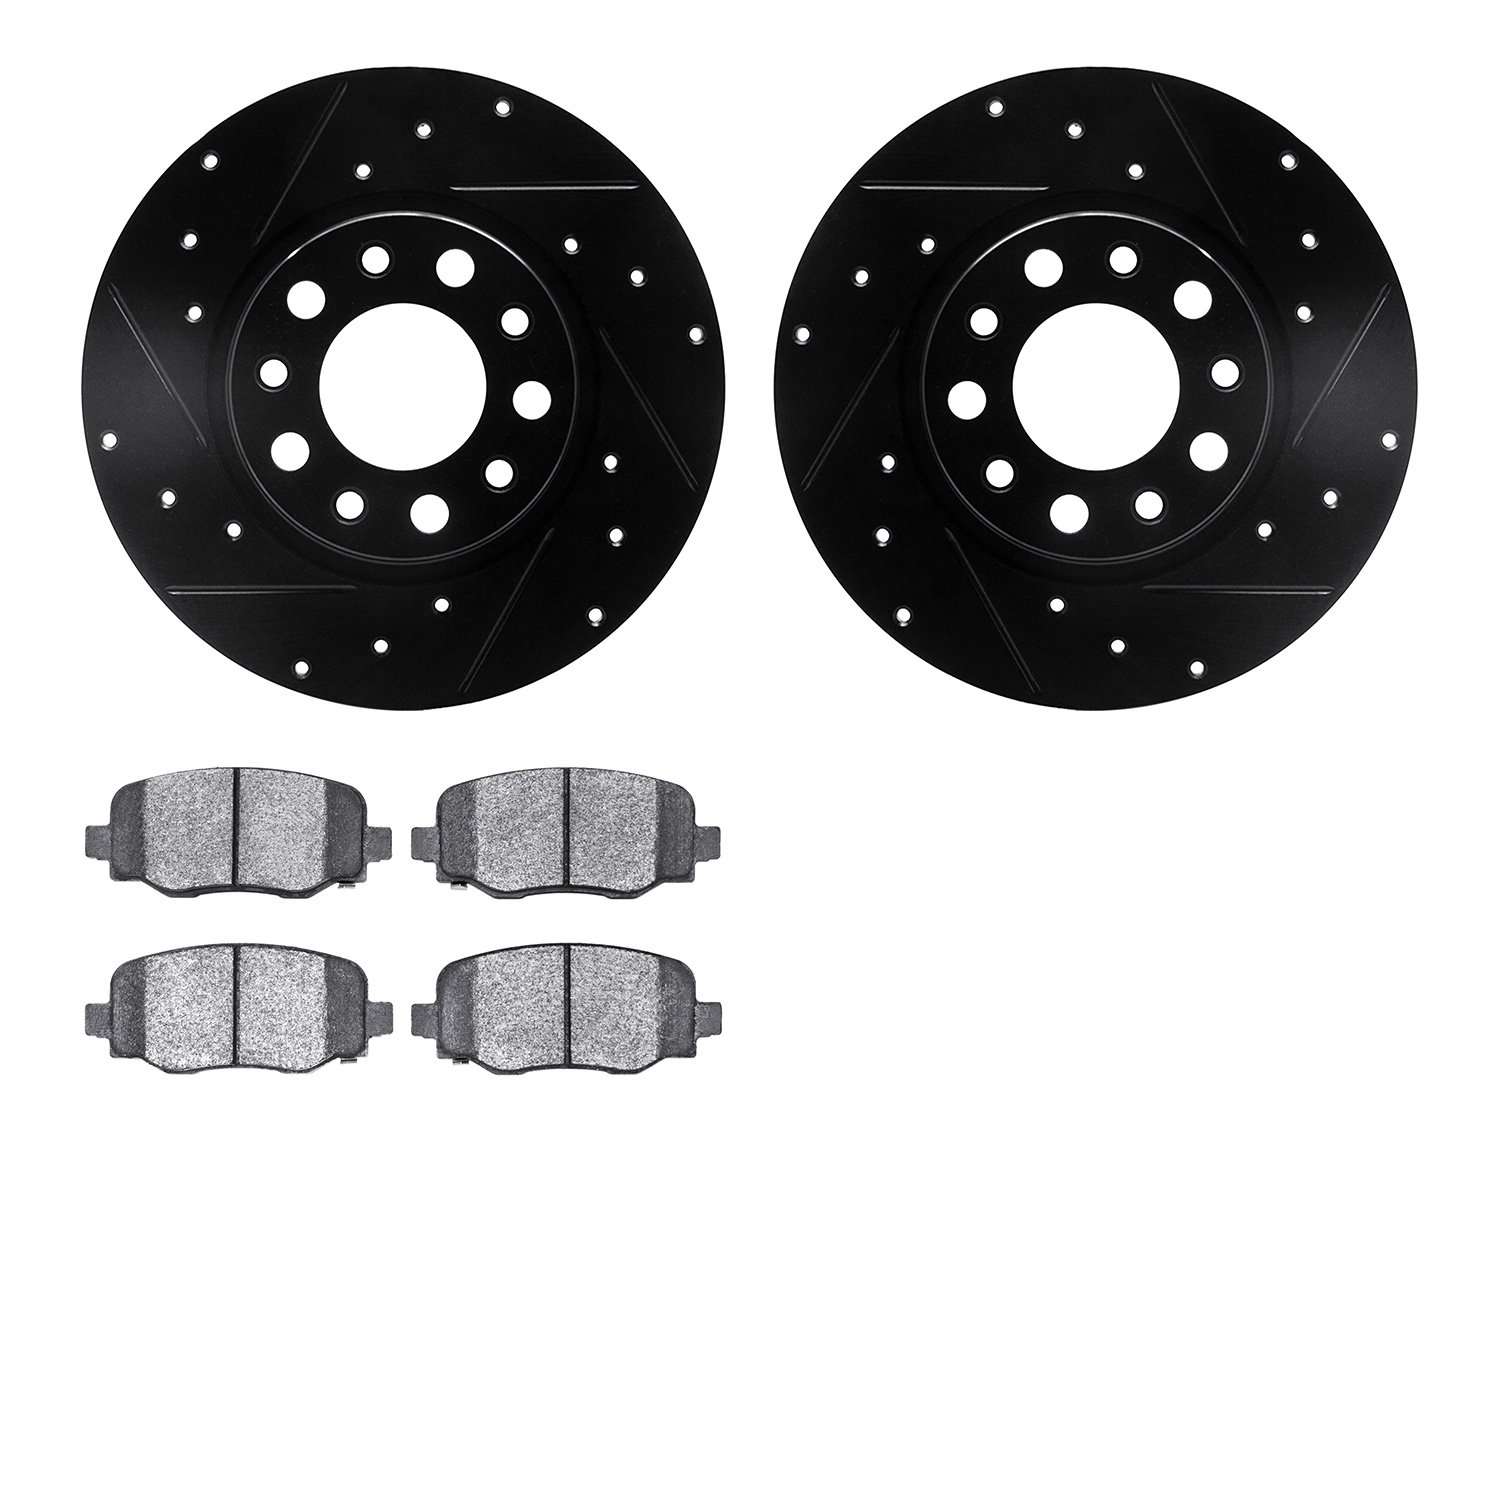 Drilled/Slotted Brake Rotors with 3000-Series Ceramic Brake Pads